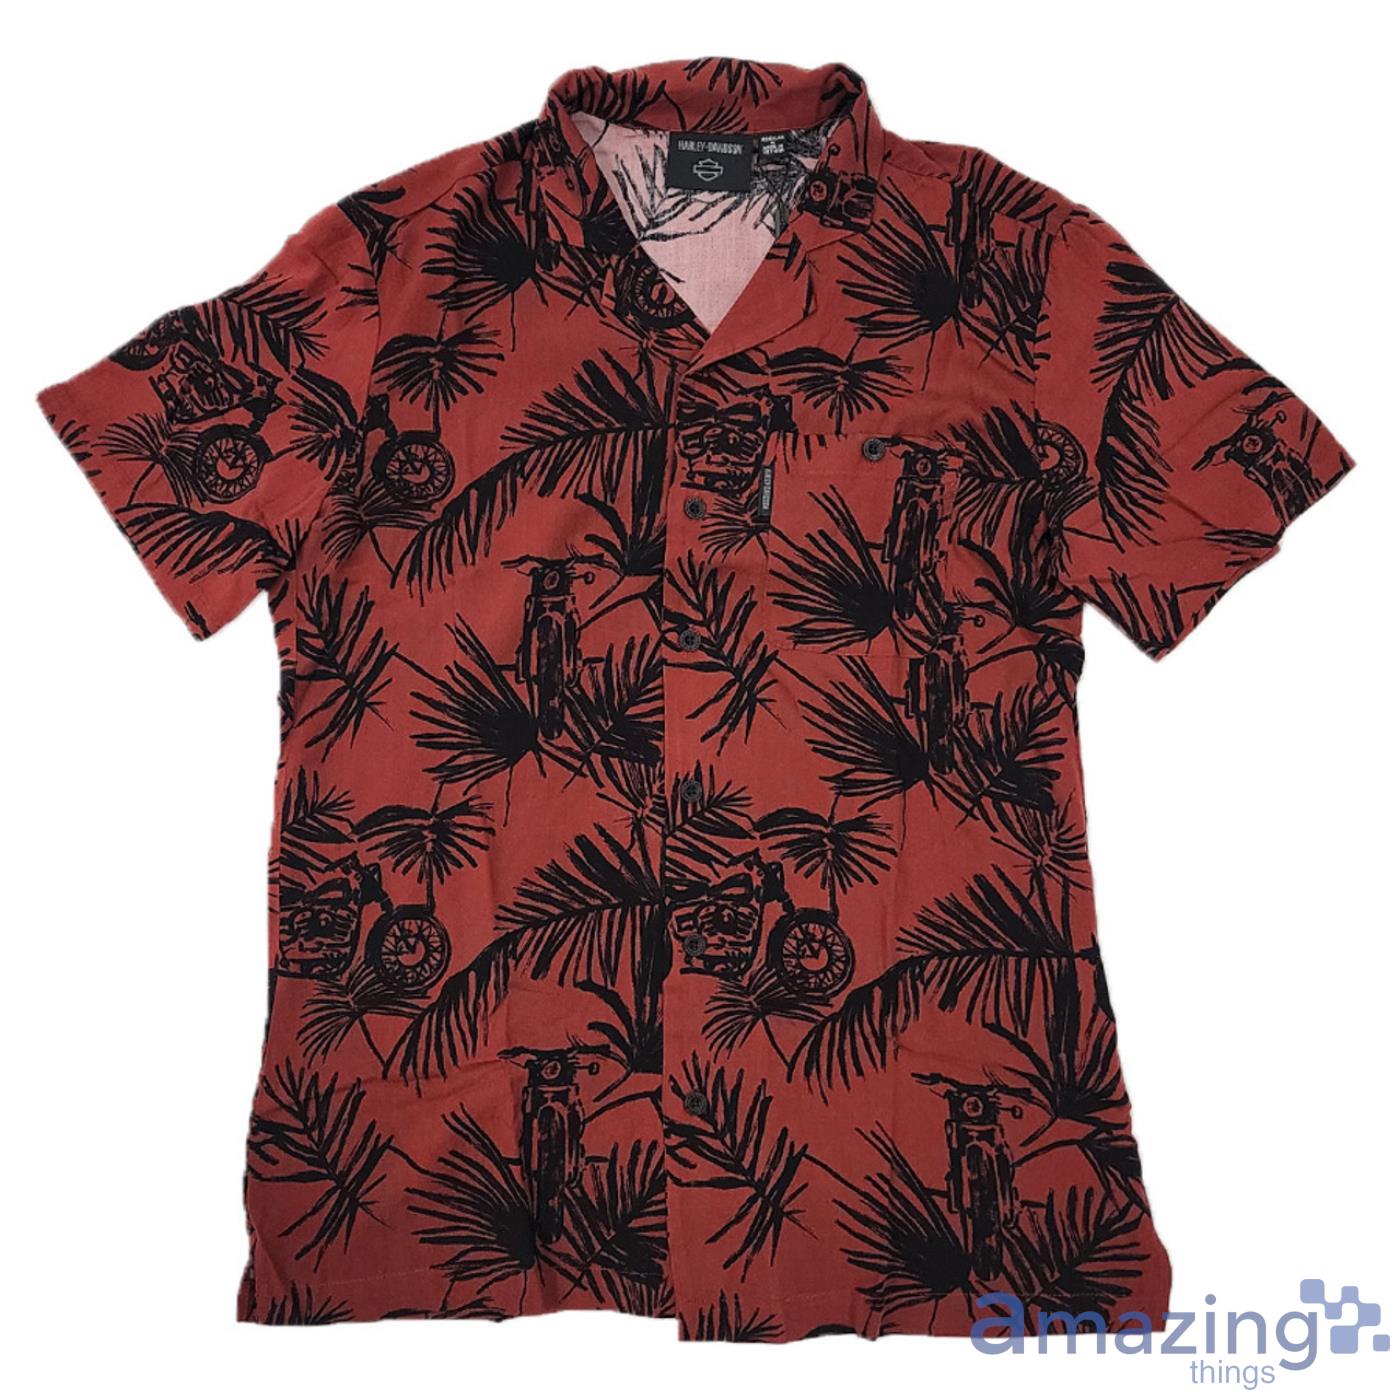 Harley-Davidson Motorcycles And Palm Leaves Short Sleeve Hawaiian Shirt Red Product Photo 1